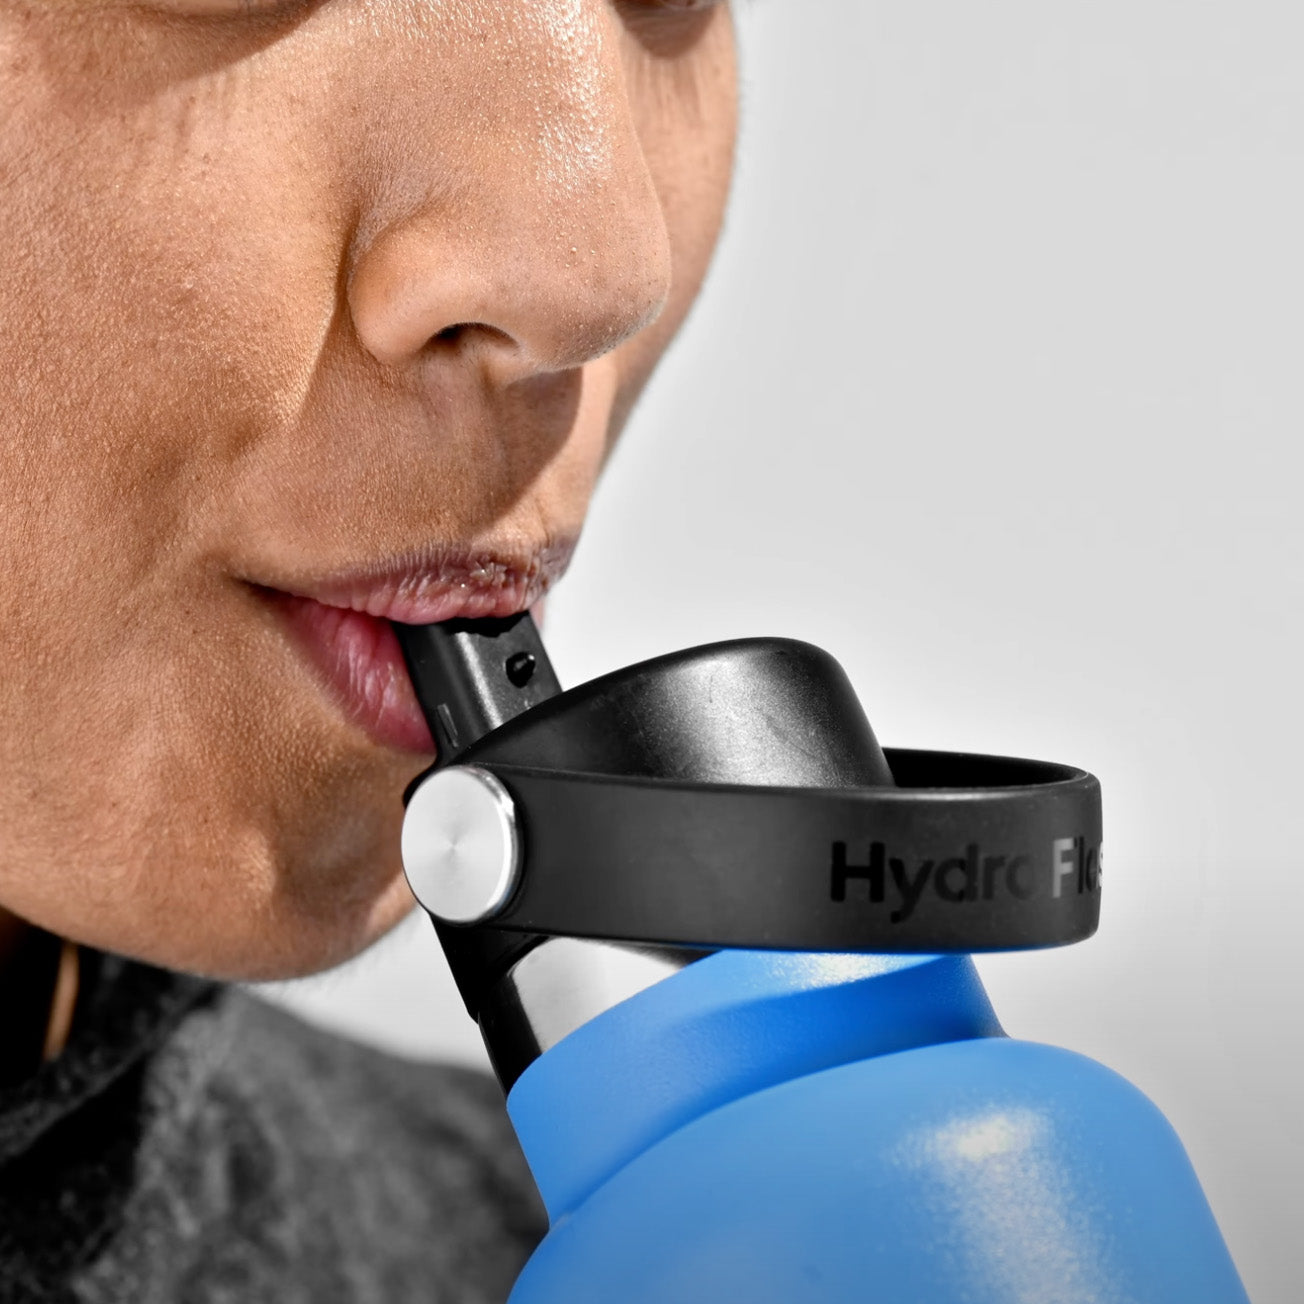 Hydro Flask Standard Mouth Flex Cap + Straw Cap, 710ml (24oz)